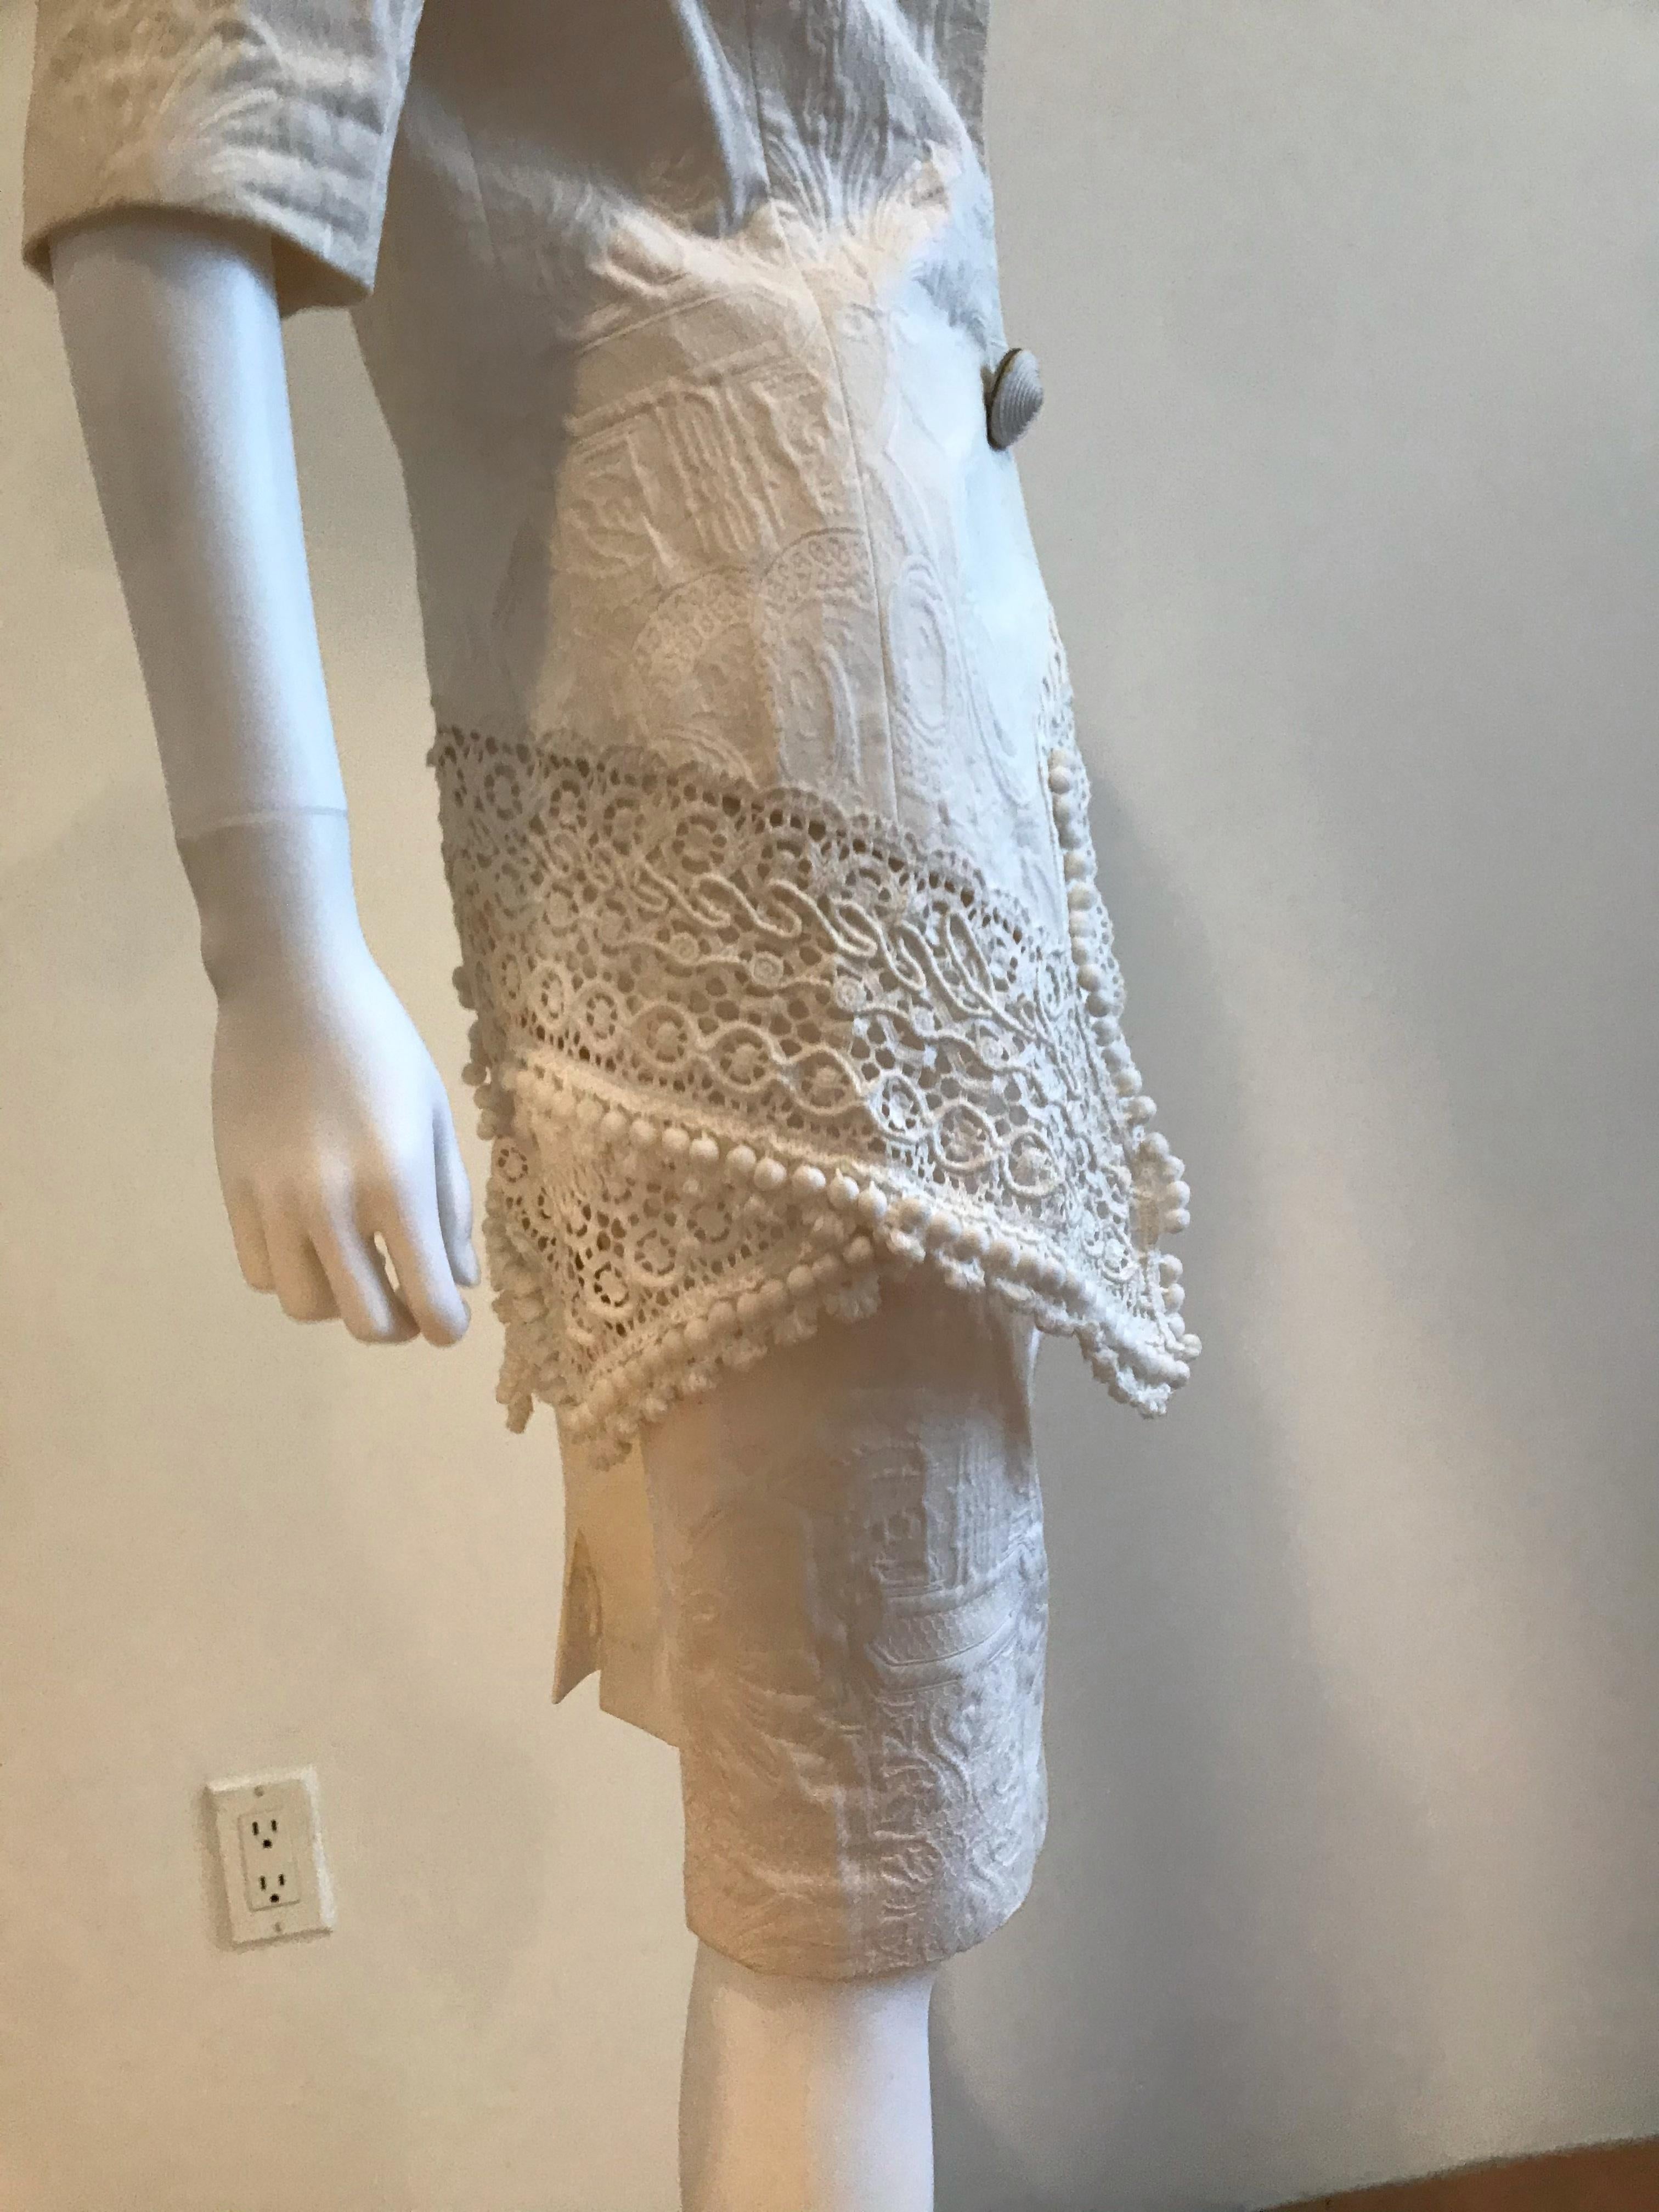 Gianfranco Ferre Brocade Crochet Lace & Pom Pom Detail Jacket and Skirt Ensemble For Sale 6